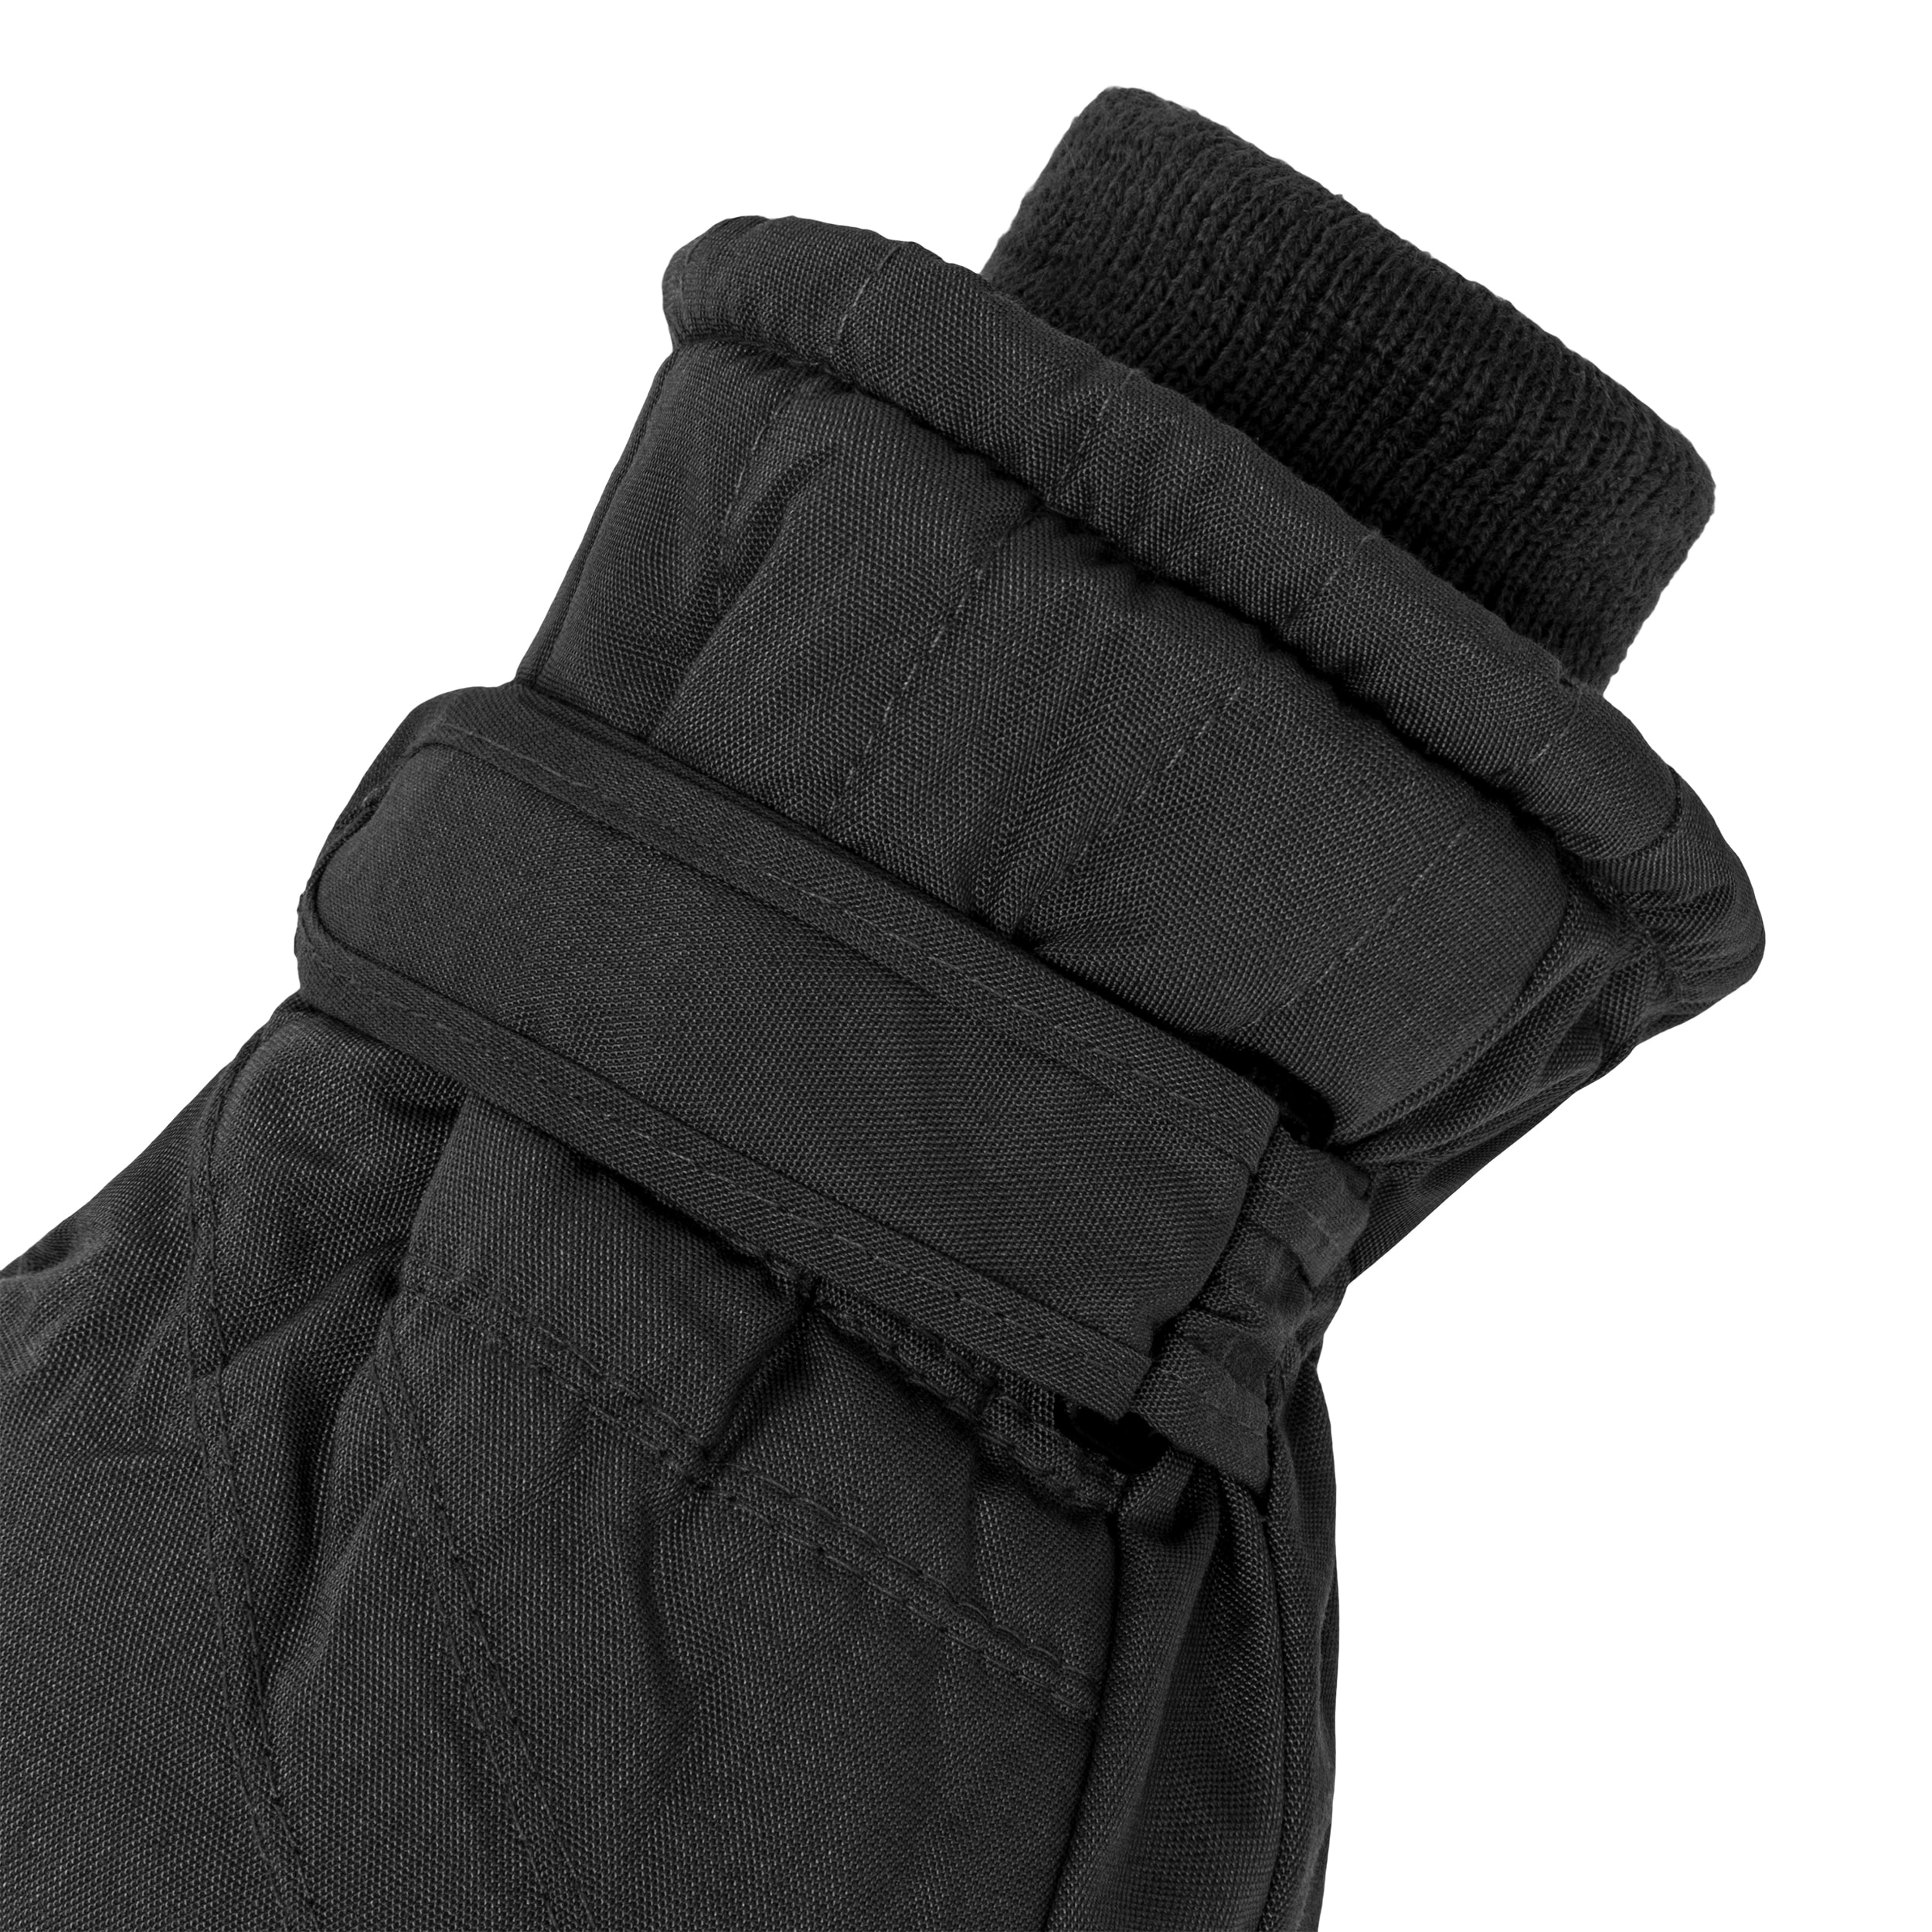 Rękawice zimowe Mil-Tec Thinsulate - Black